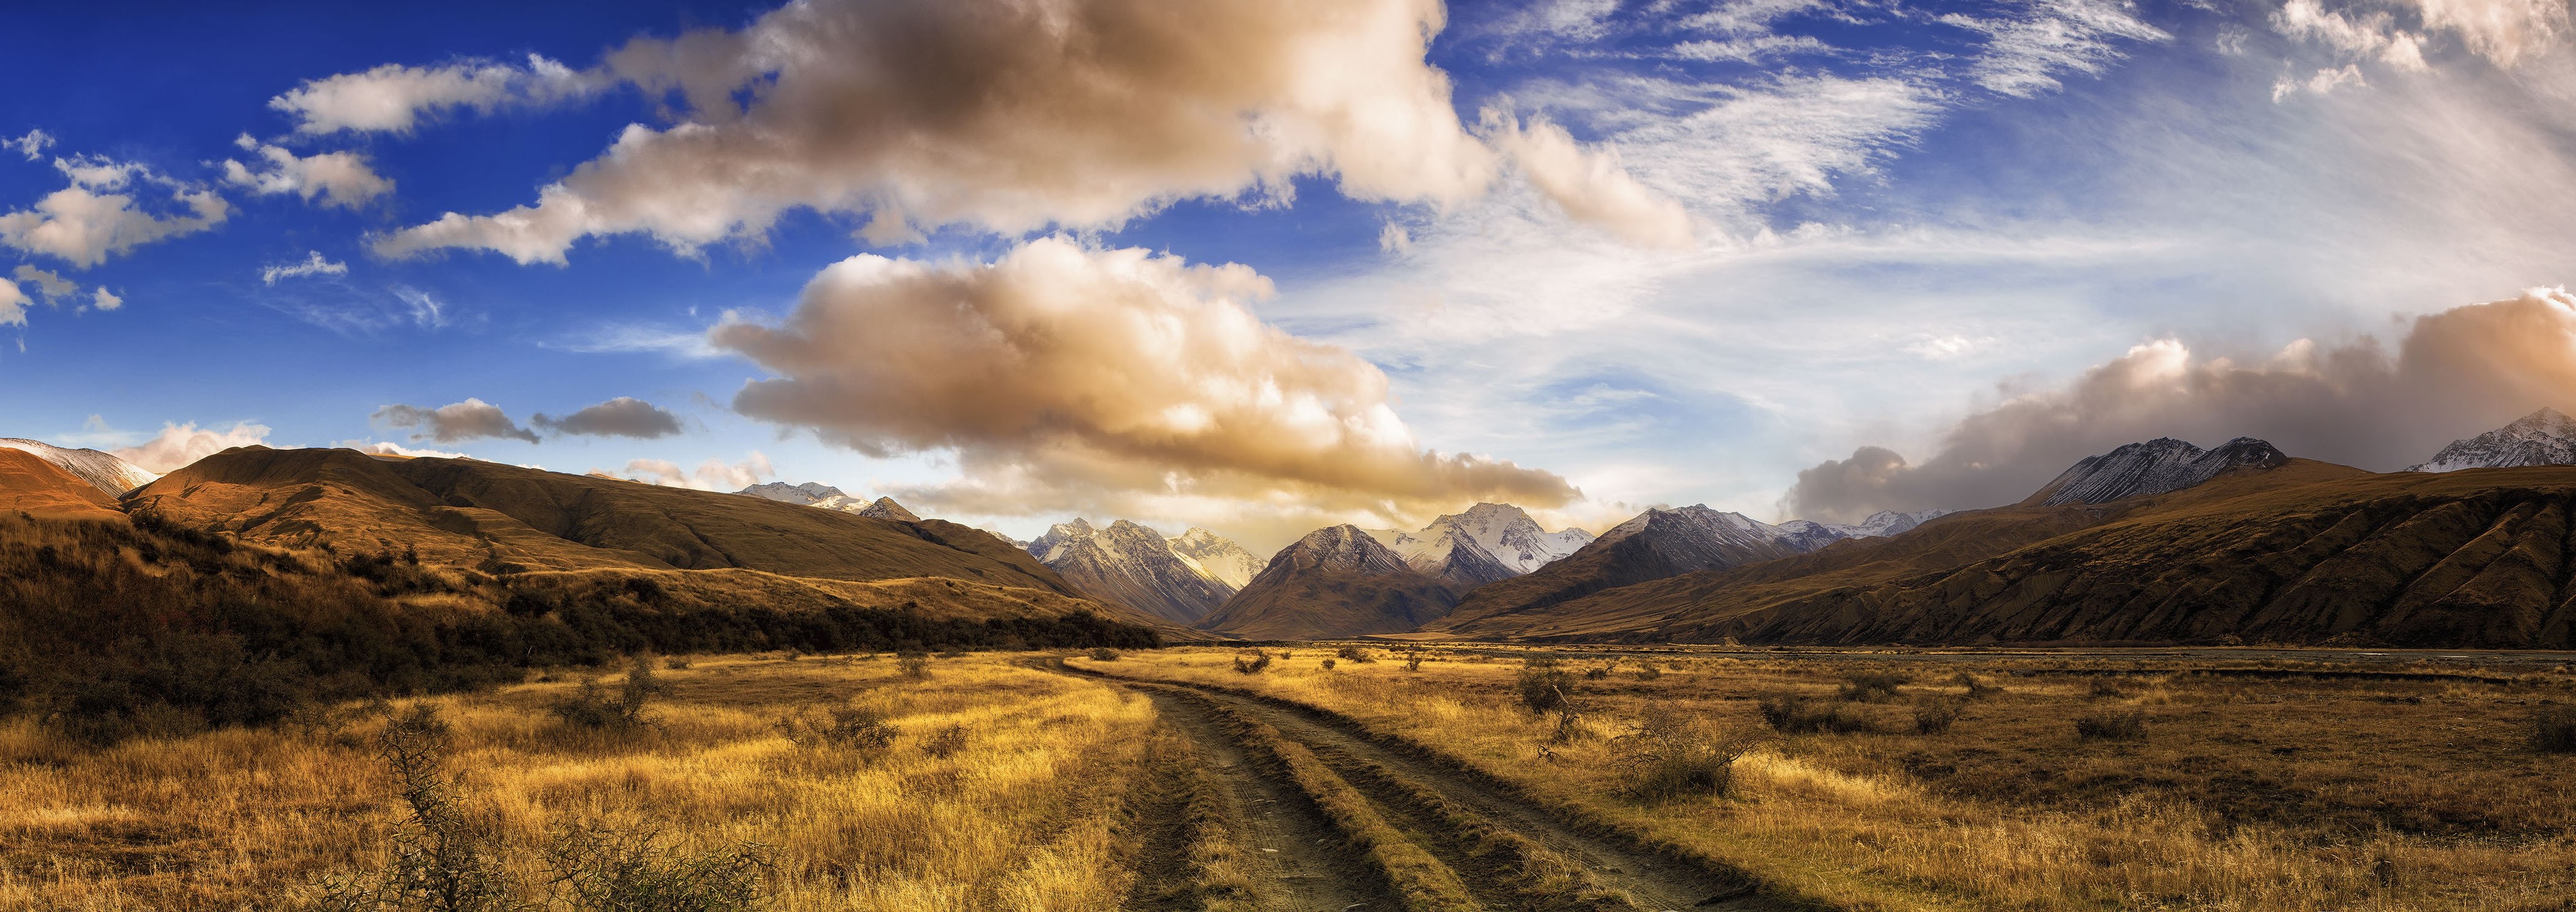 nature, Landscape, Panoramas, Dirt Road, Dry Grass, Mountain, Clouds, Shrubs, Sunset, Snowy Peak, New Zealand Wallpaper